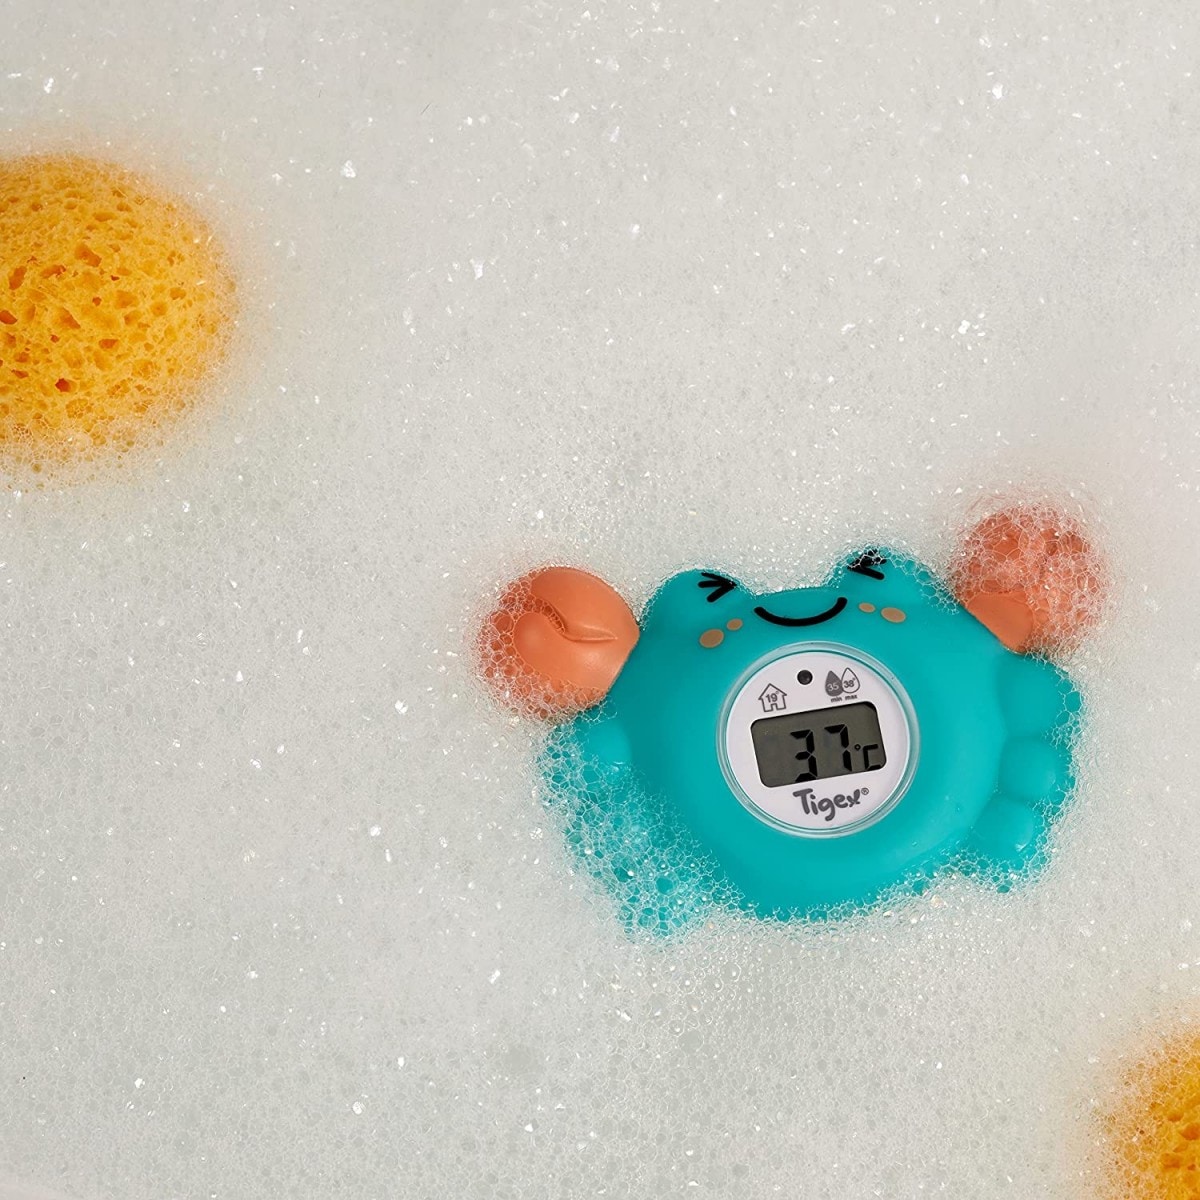 Thermomètre de bain